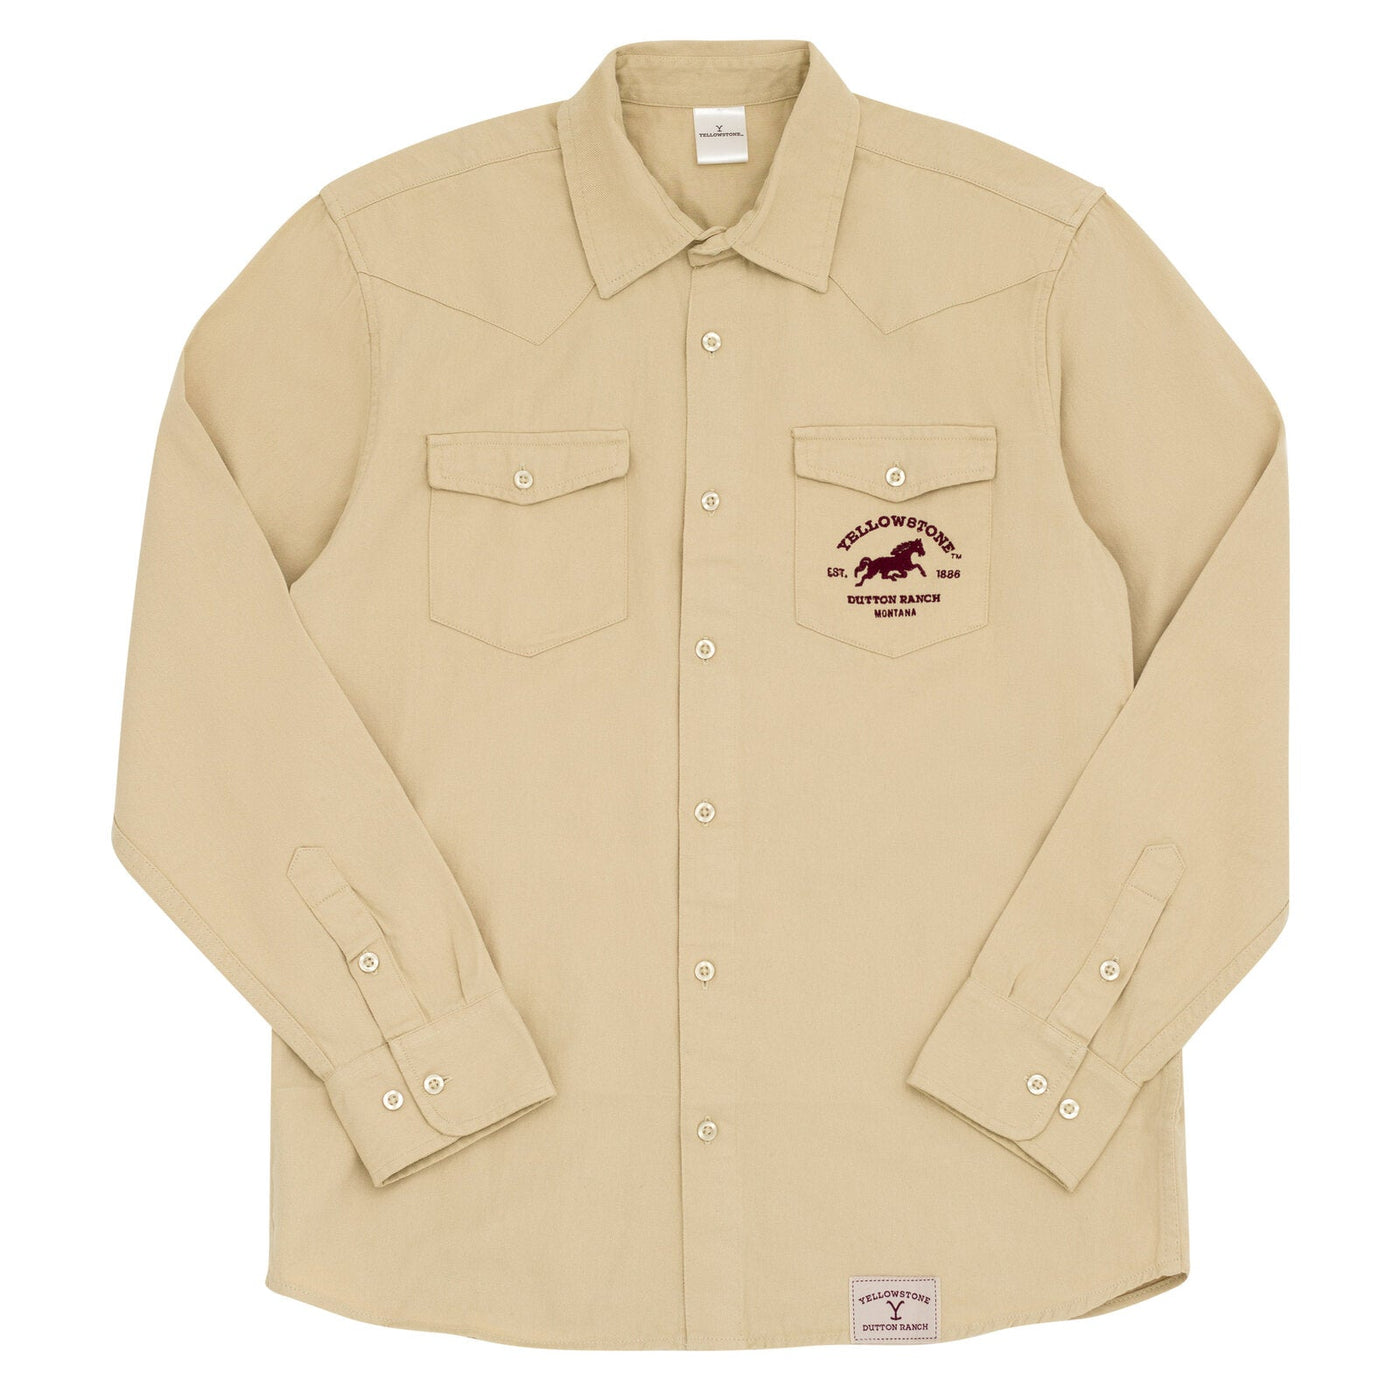 Y Yellowstone Adult Twill Ranch Hand Shirt Vintage Wash Button Down Dress Shirt - imagikids